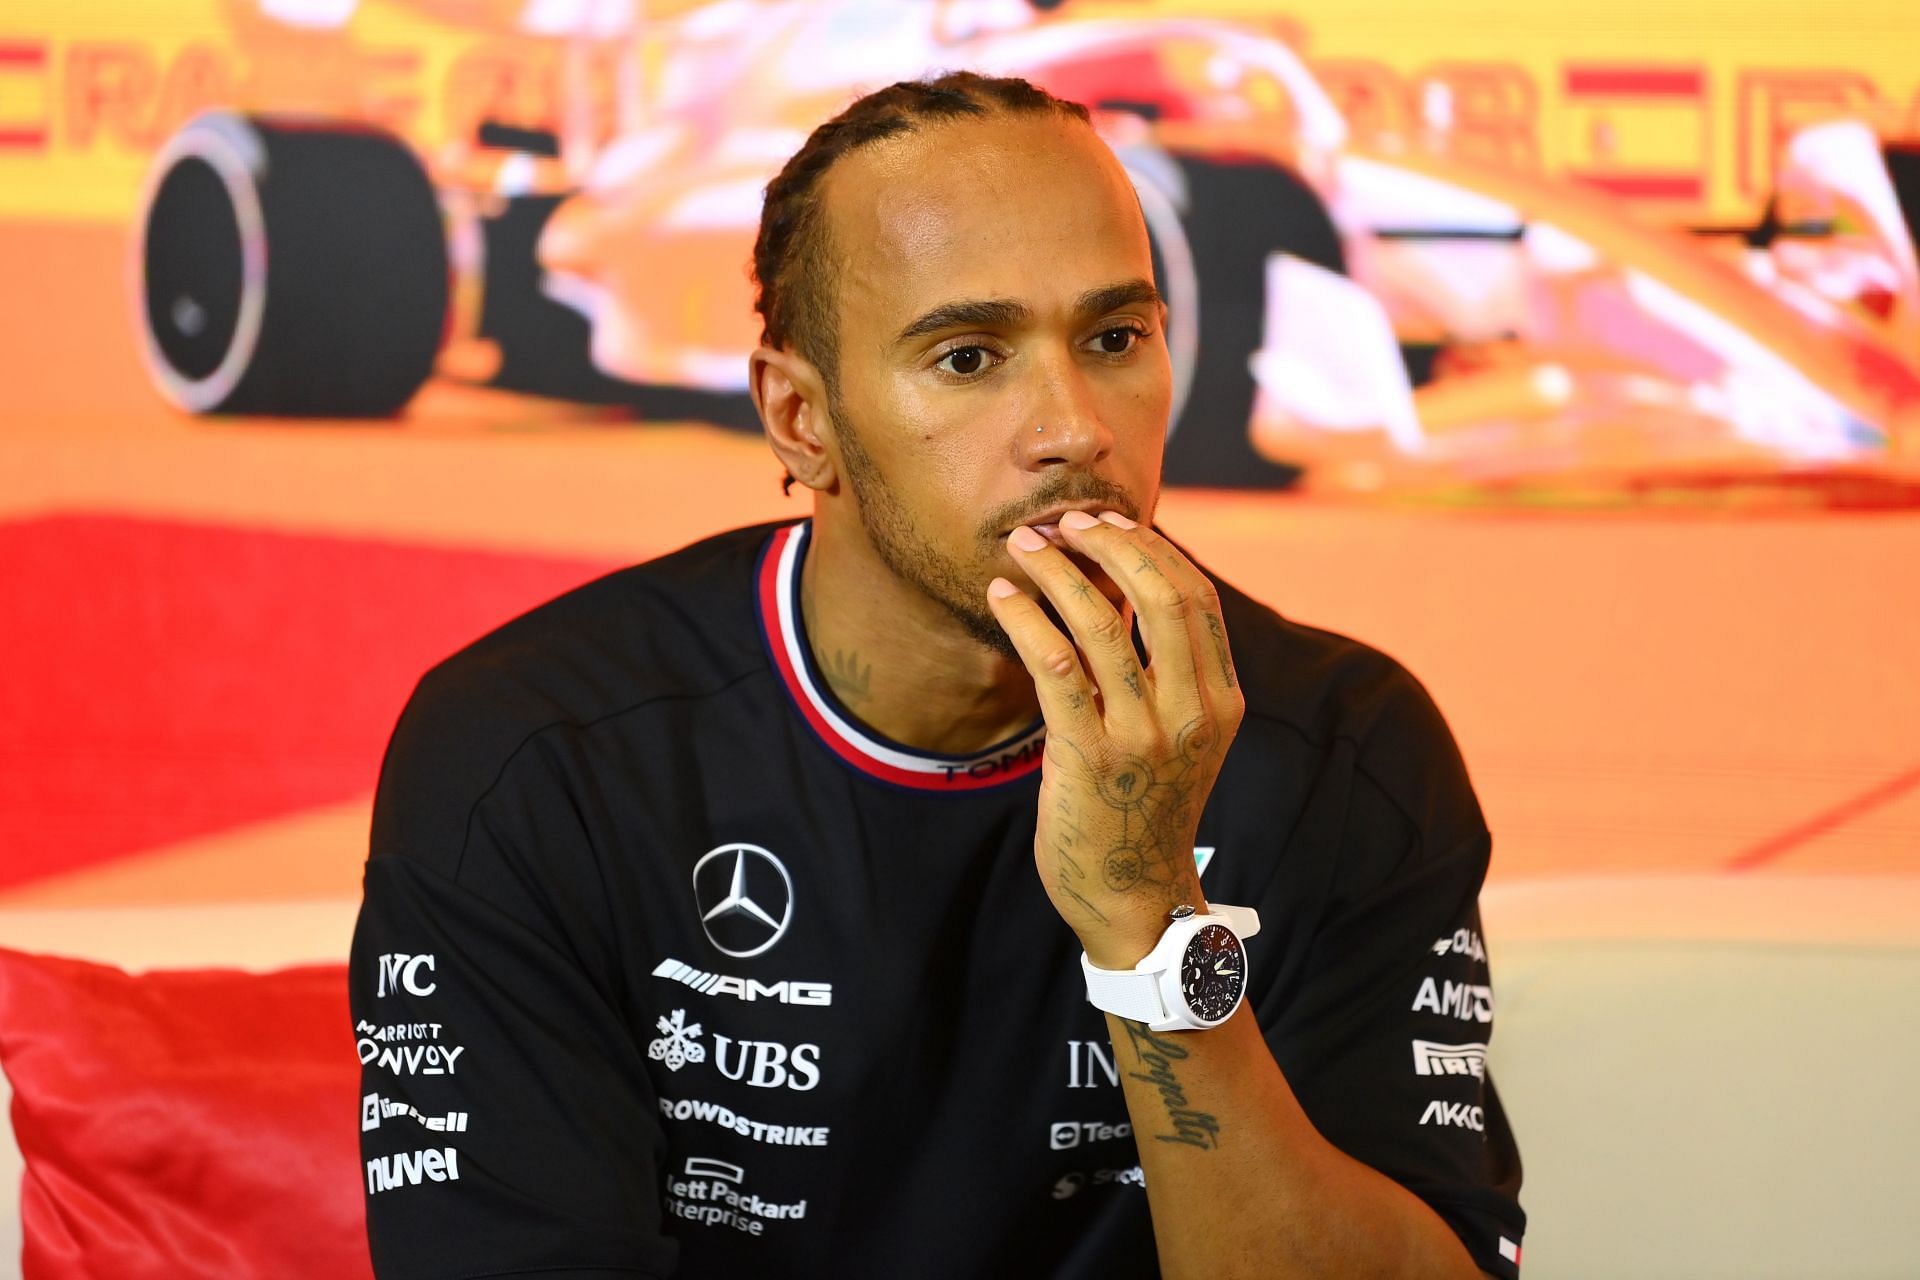 Lewis Hamilton in the Spanish GP